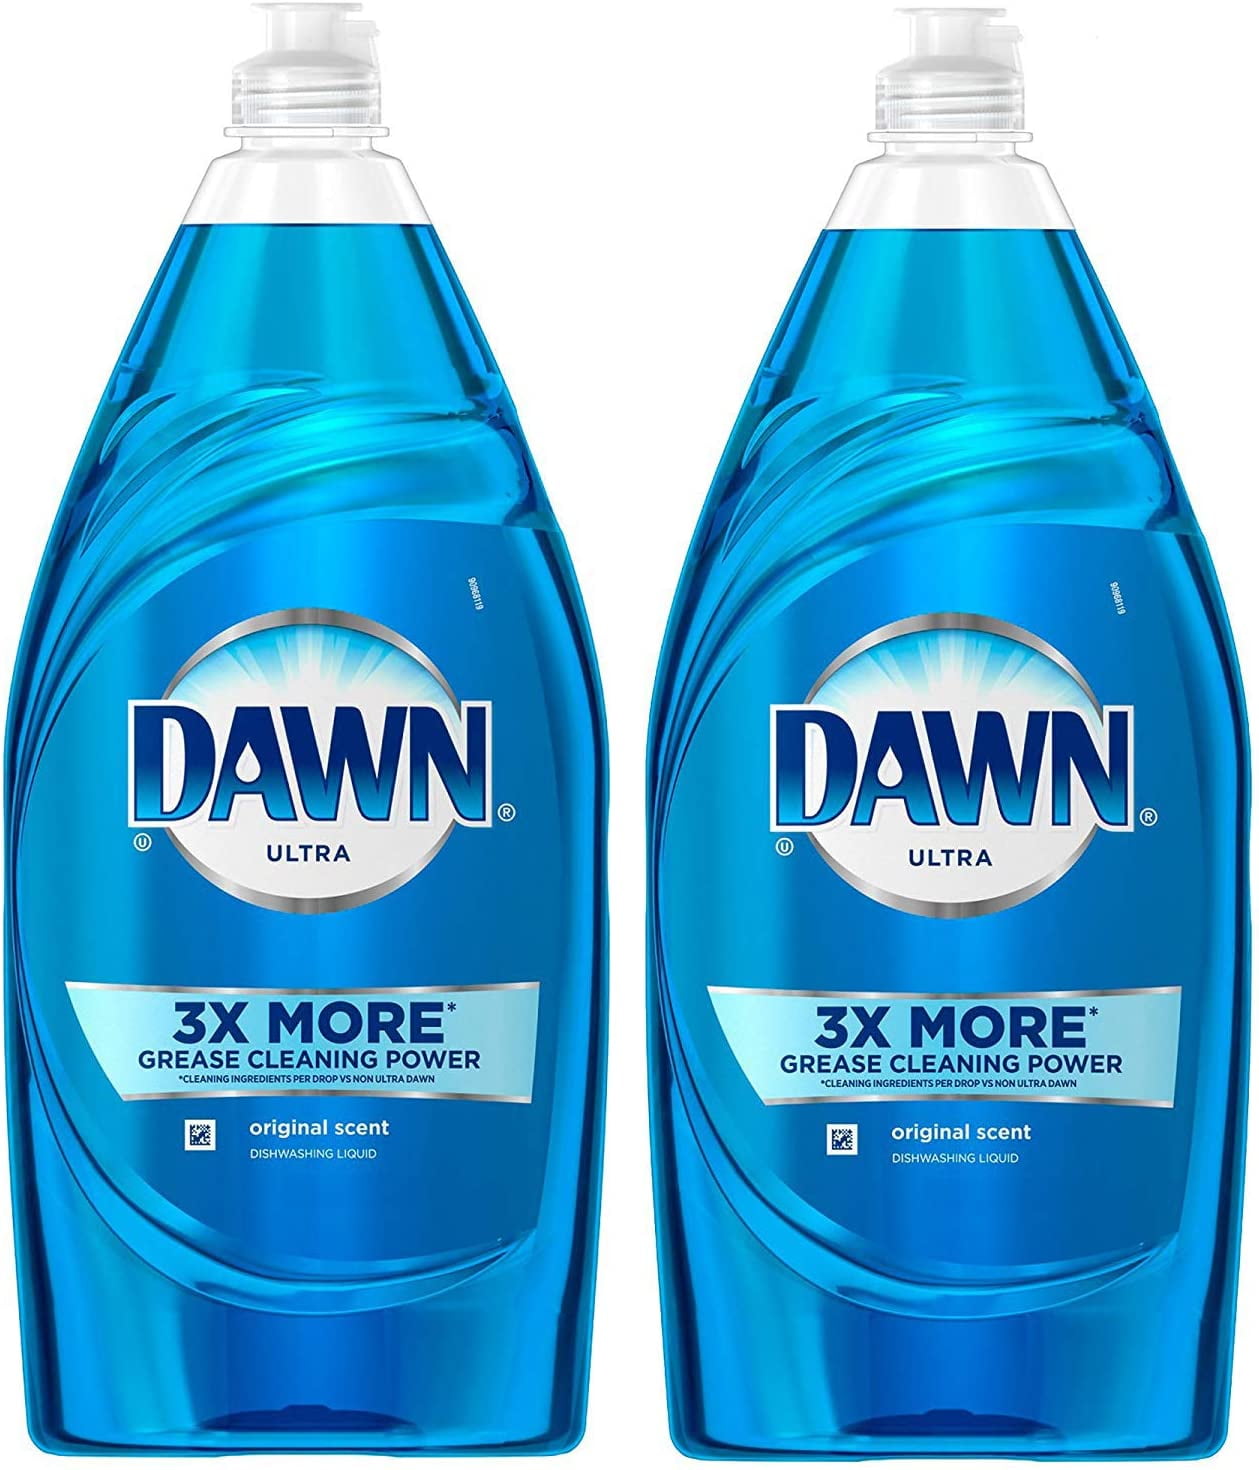 Dawn Dishwashing Liquid Original Scent 75 Oz Bottle - Office Depot